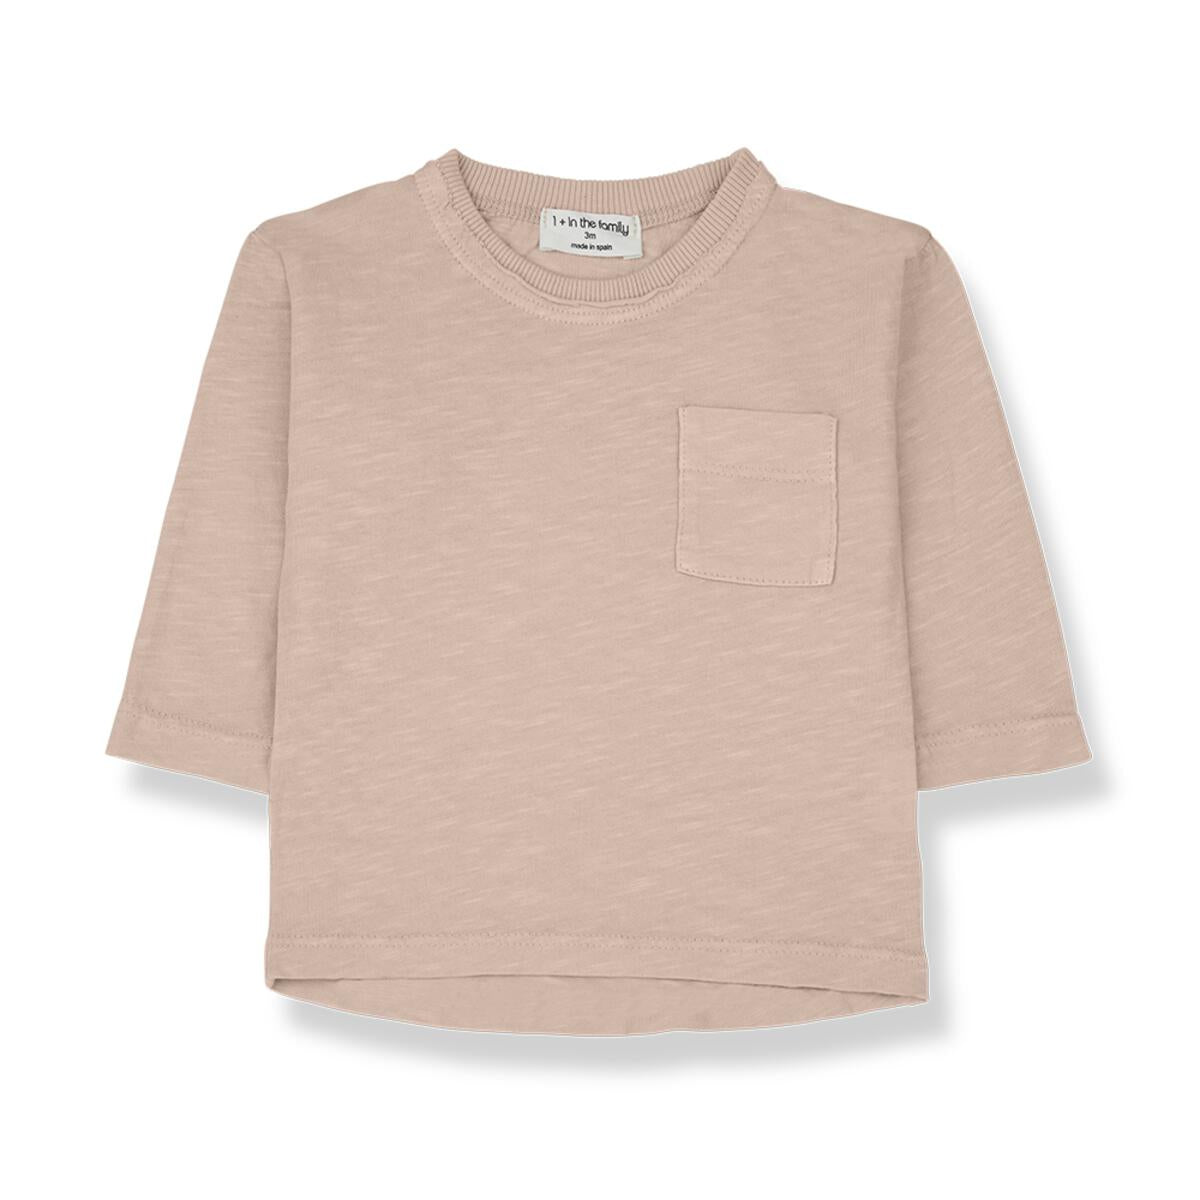 Pere Long Sleeve T-Shirt - Rose